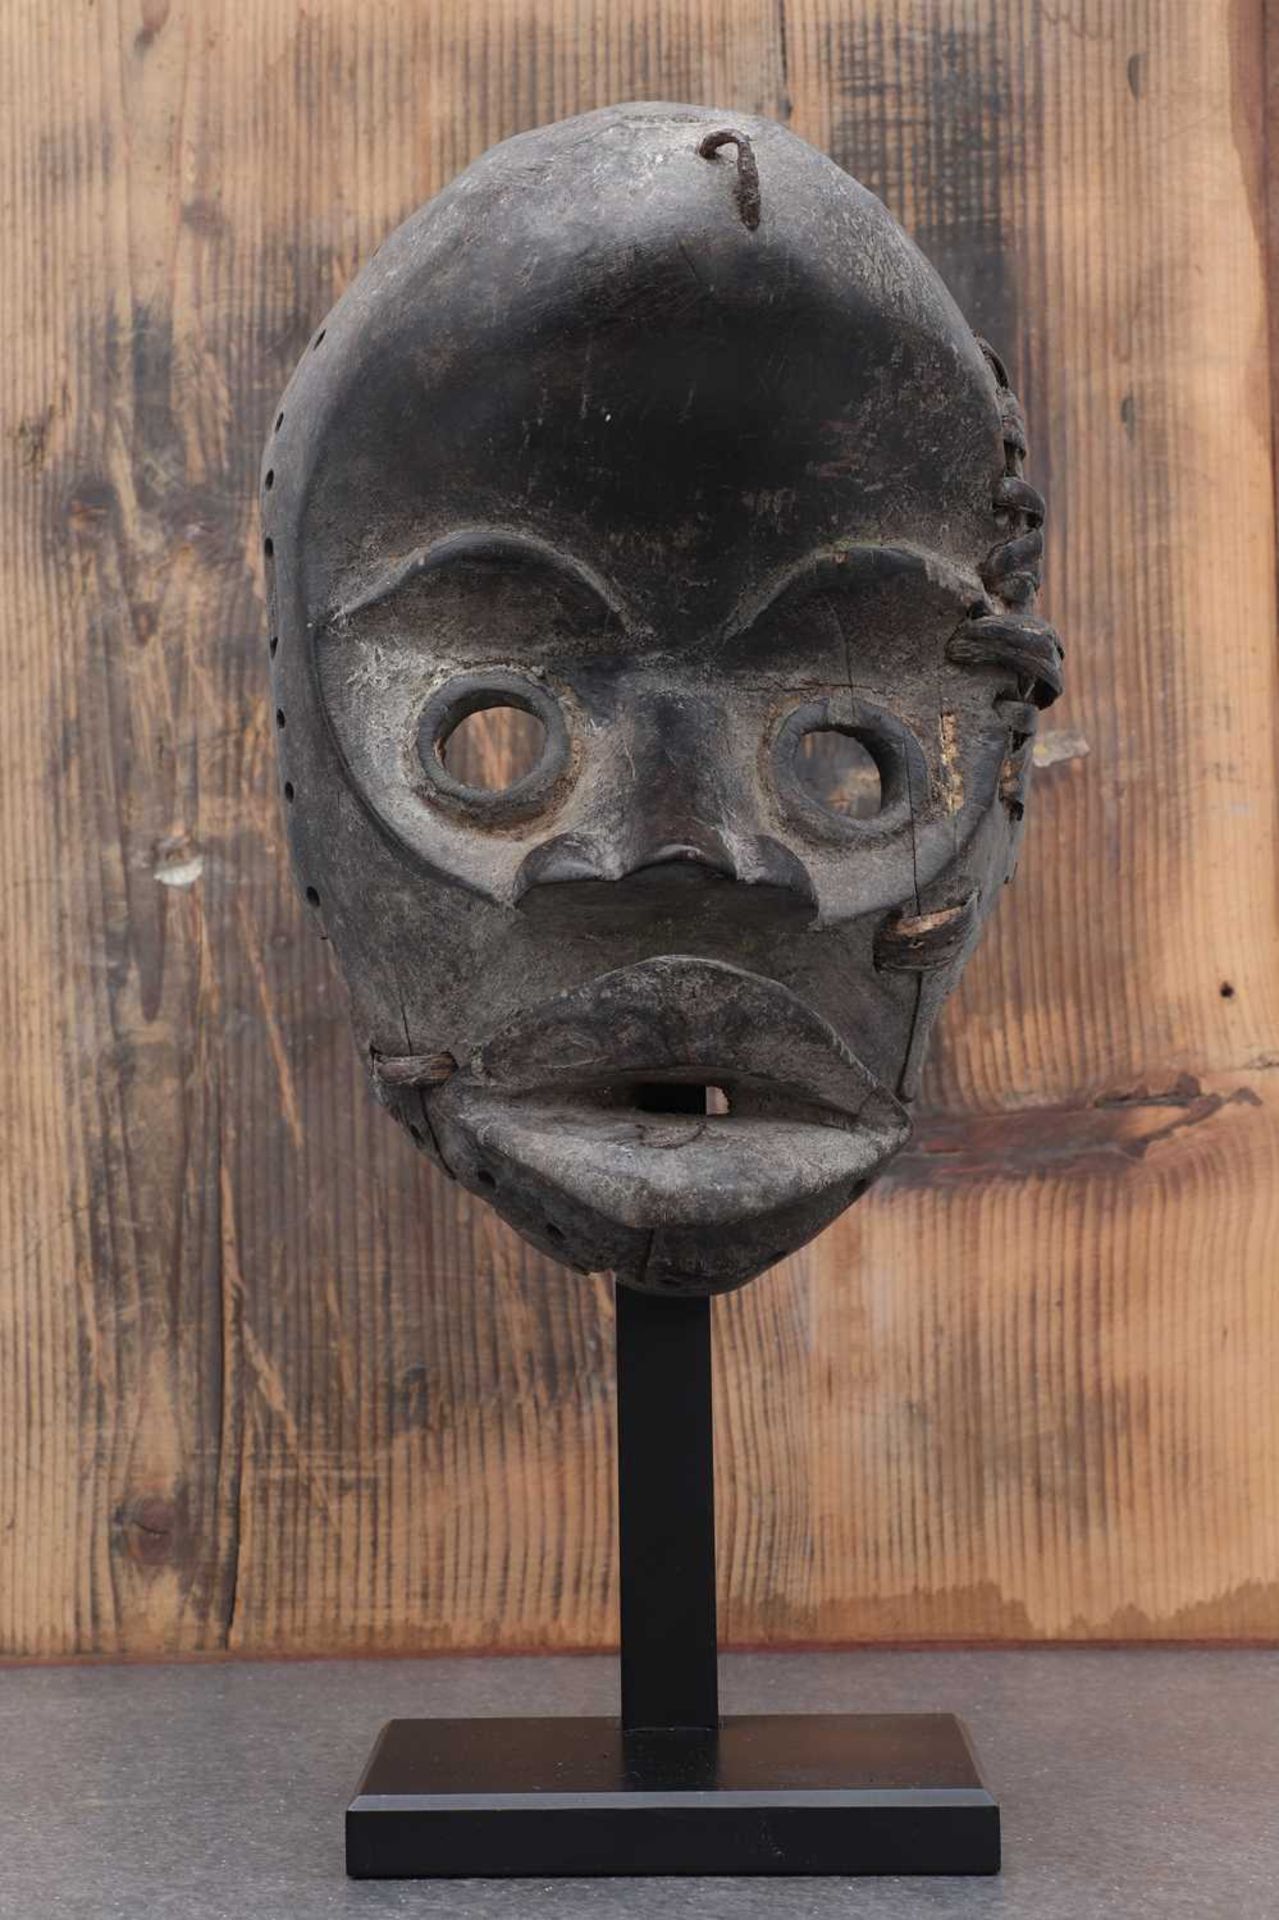 Dan society: a carved and patinated Dan mask,